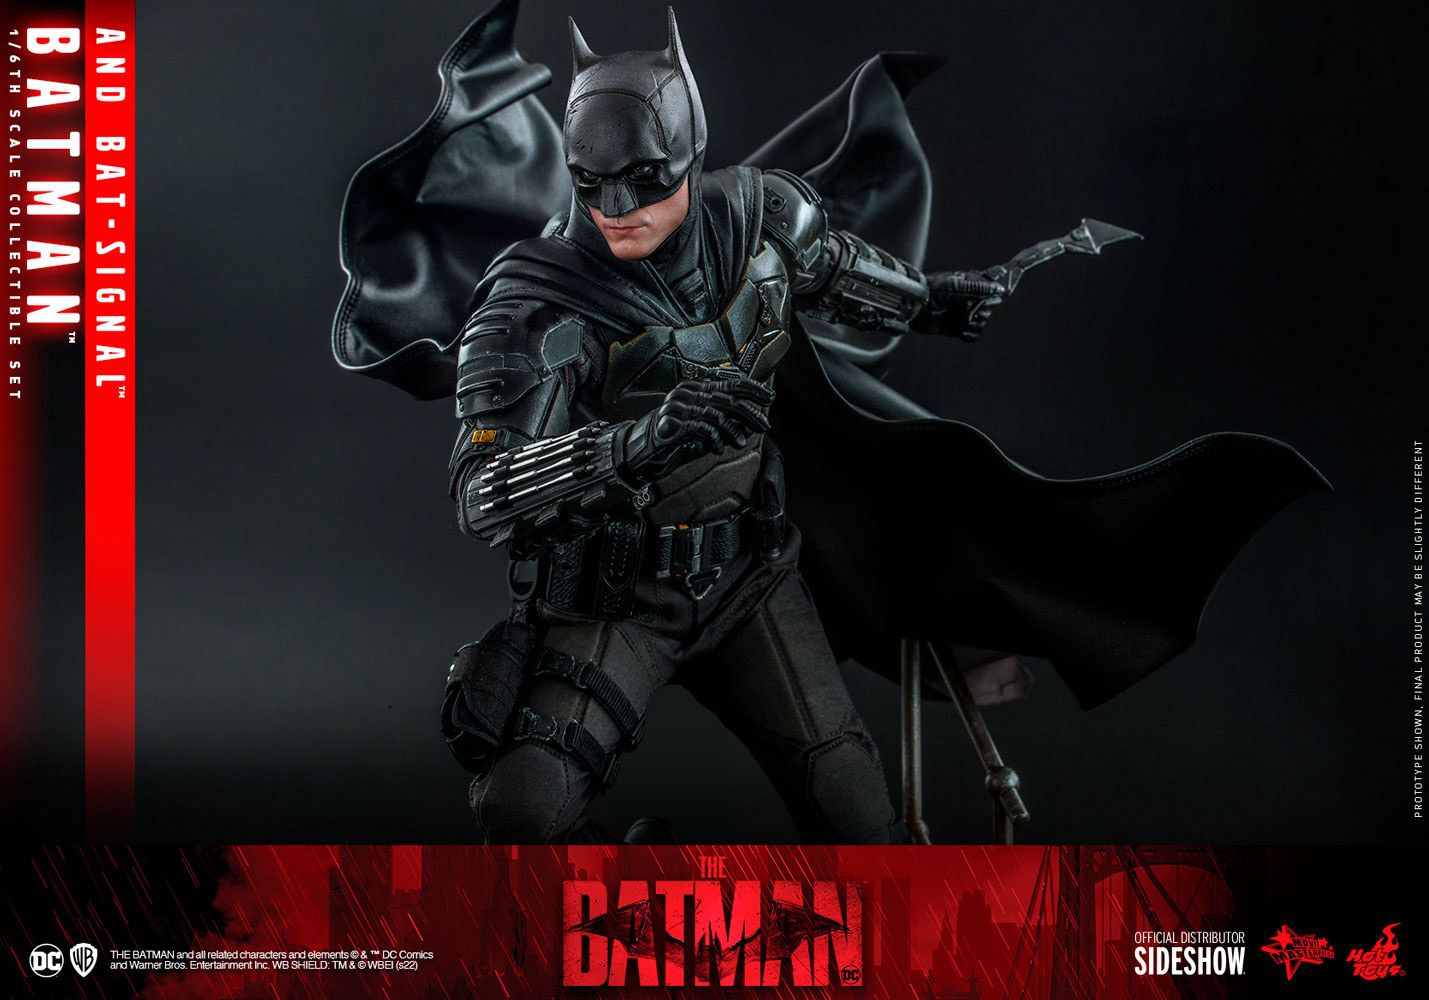 The Batman Hot Toys Figure with Cape and Batarang